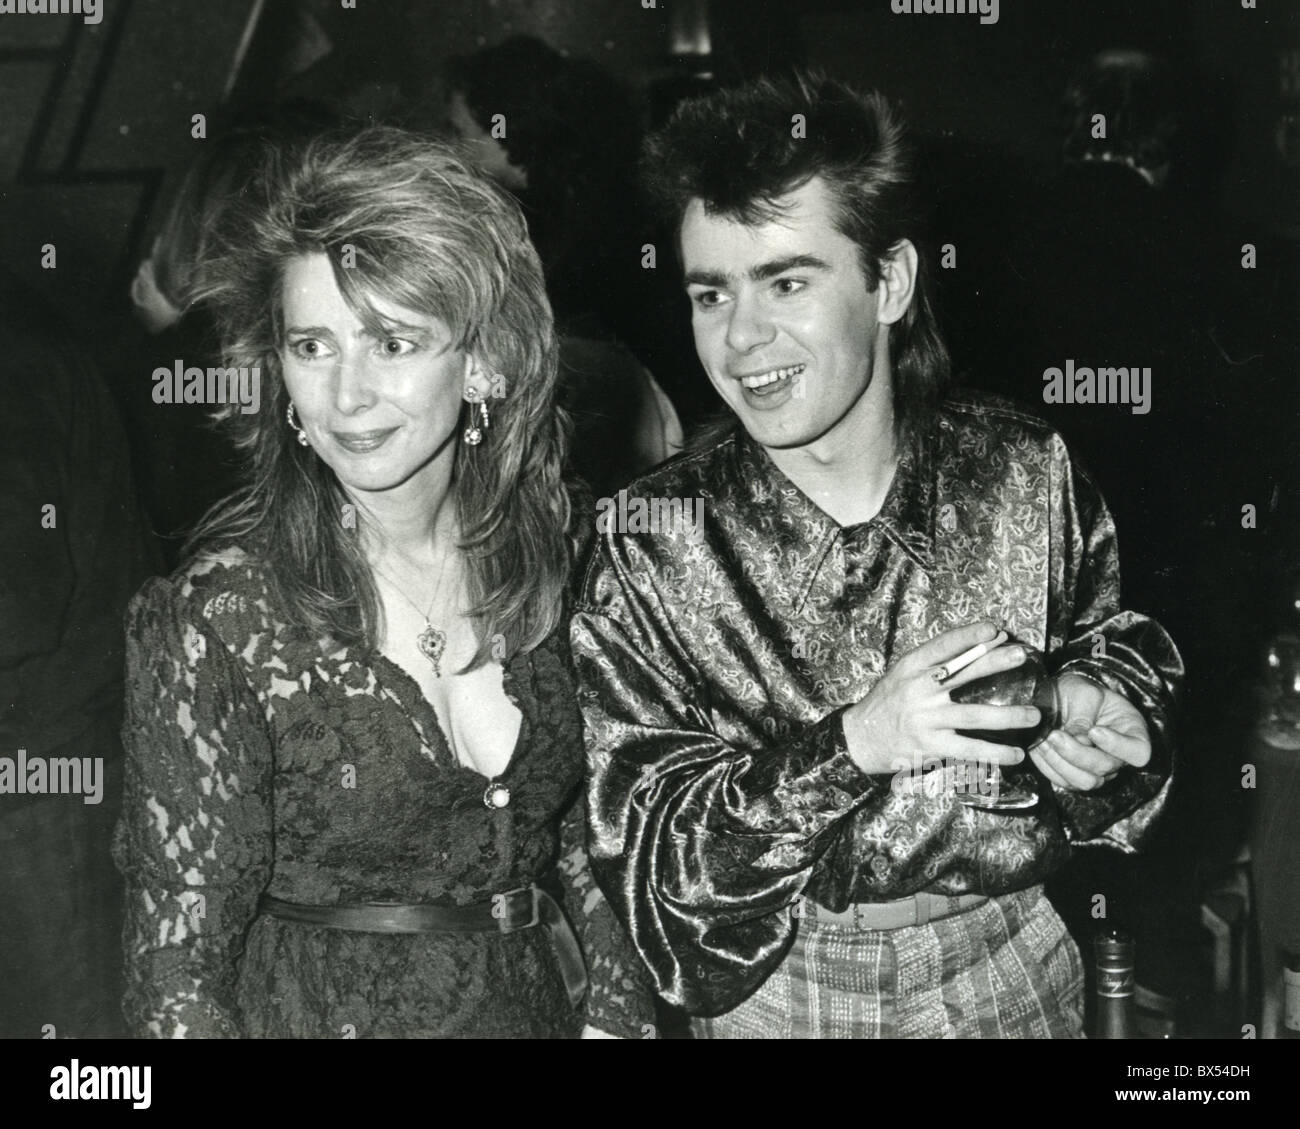 NIK KERSHAW English pop singer with his wife Sheri about 1987